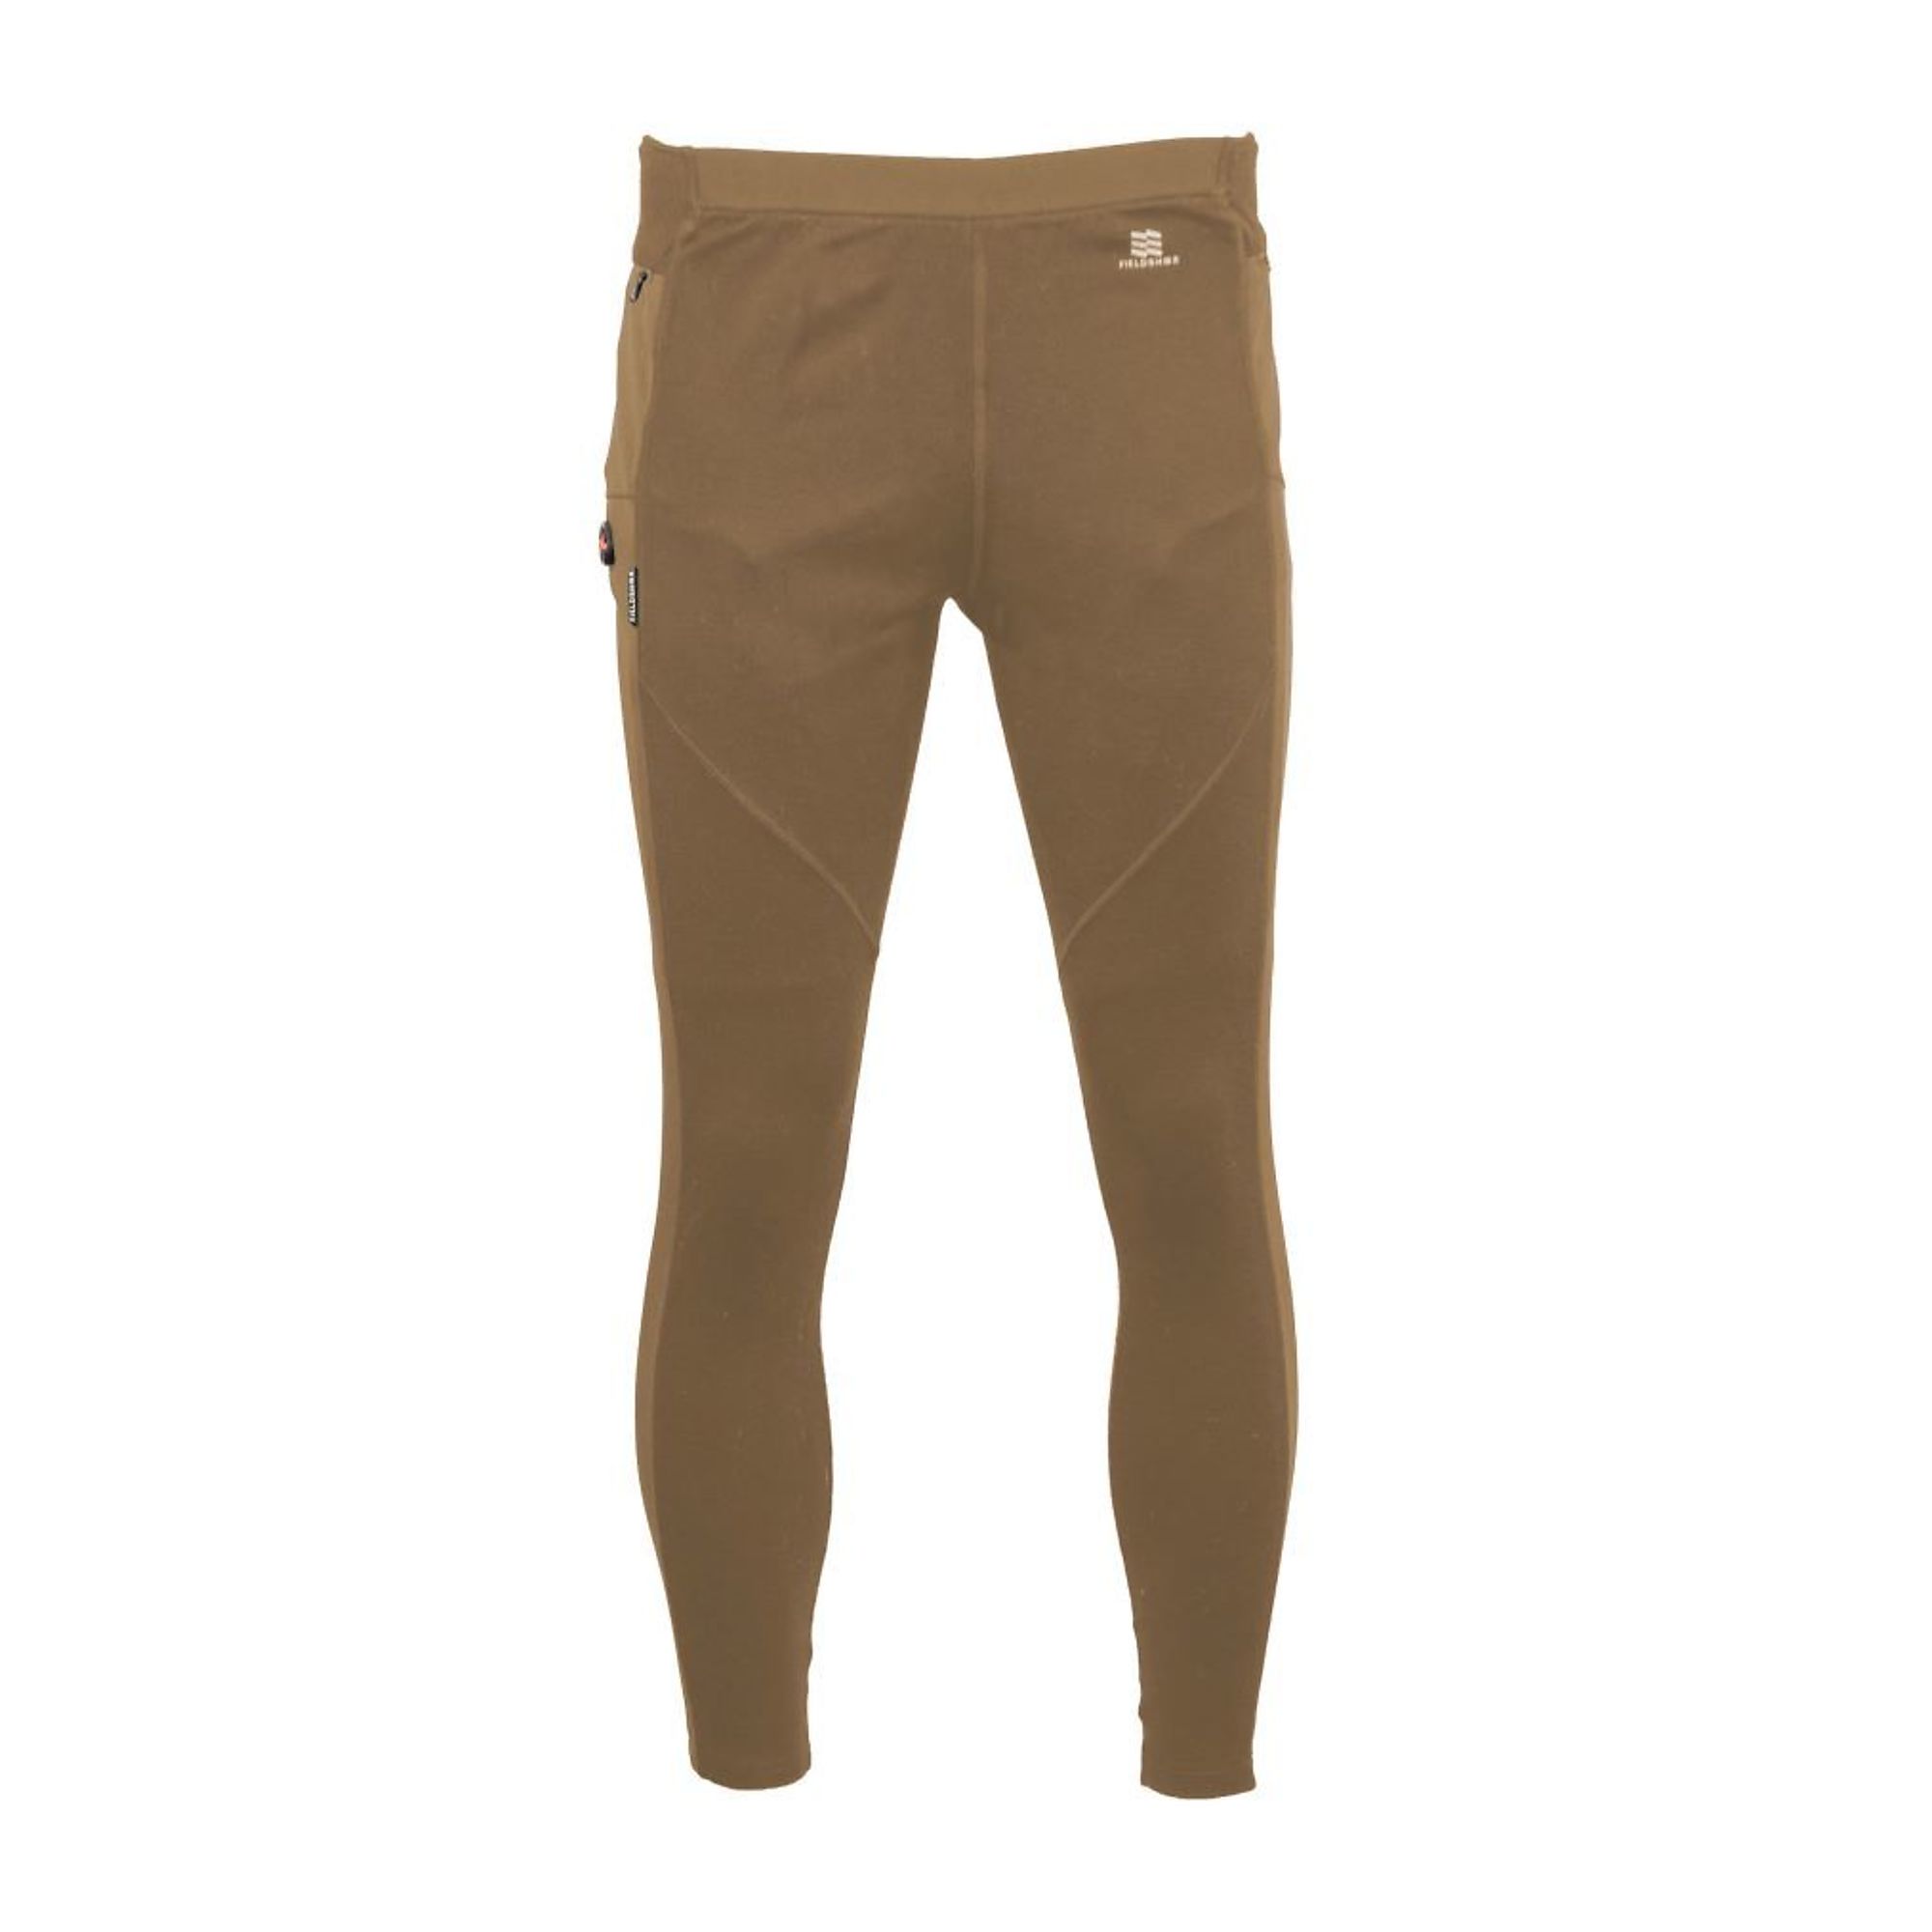 Fieldsheer, Men's Merino Heated Baselayer Pant, Size 2XL, Color Morel, Model MWMP21340622